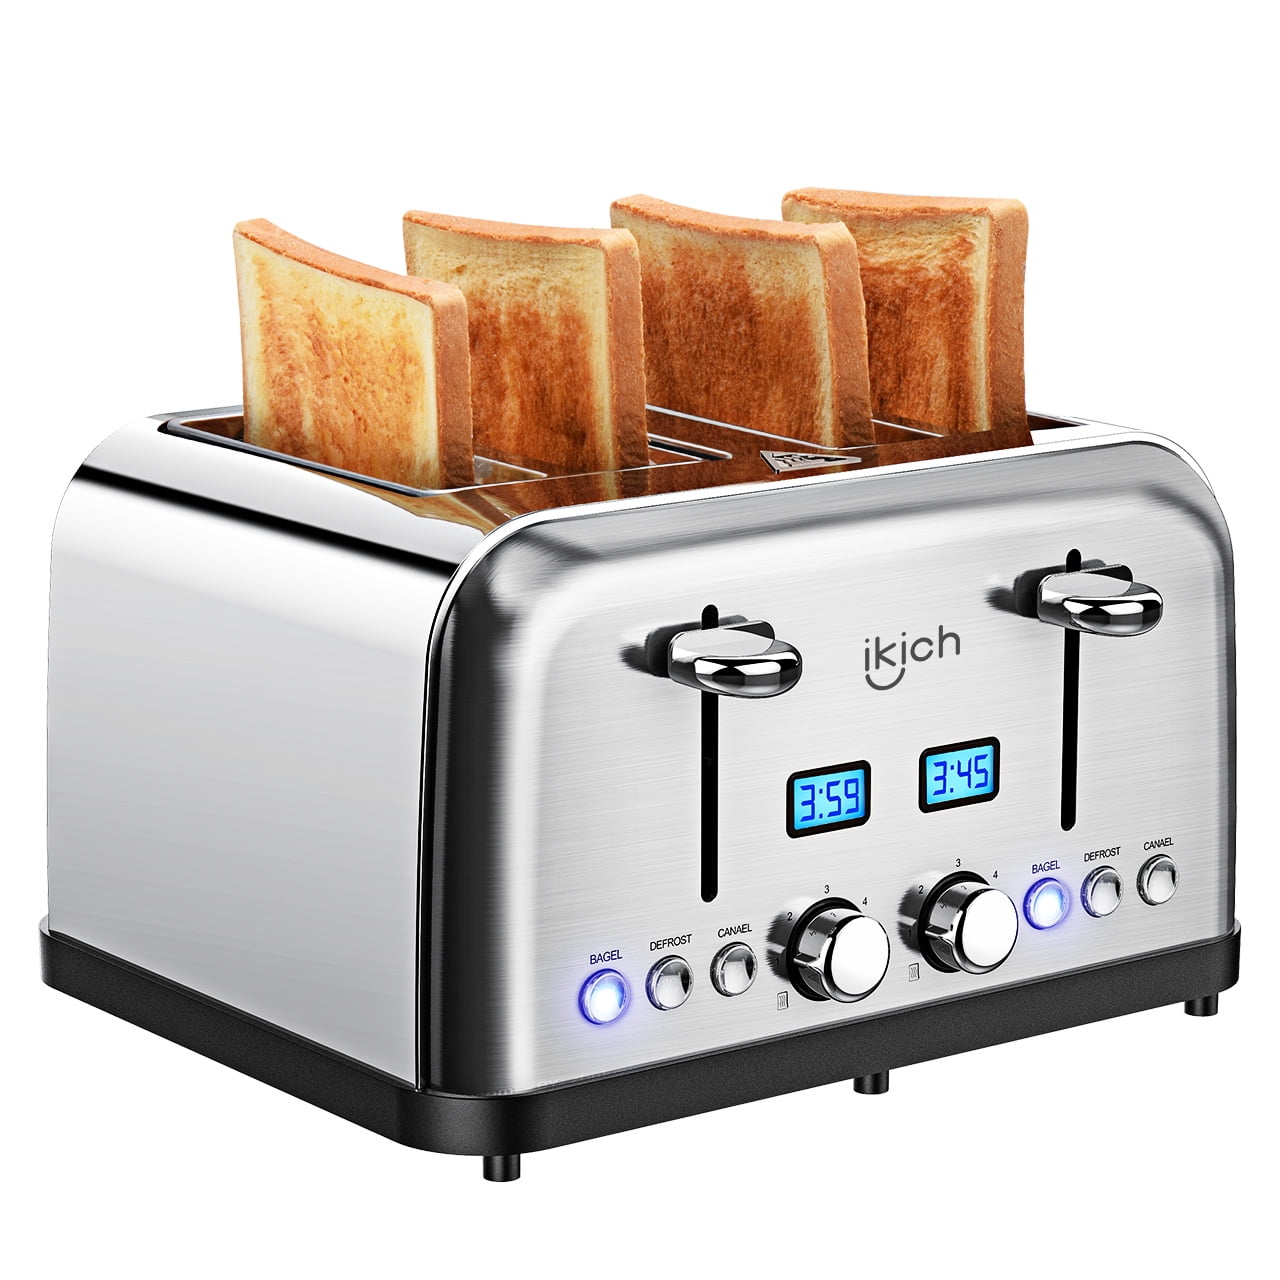  DyBaxa 4 Slice Toaster Wide Slot, Long Slot Toaster 2 Slice, Slim  Toaster 4 Slice for Bagel Sourdough Artisan Croissant, Cancel Defrost  Reheat, 6 Toast Settings, Warming Rack, Crumb Tray, Black